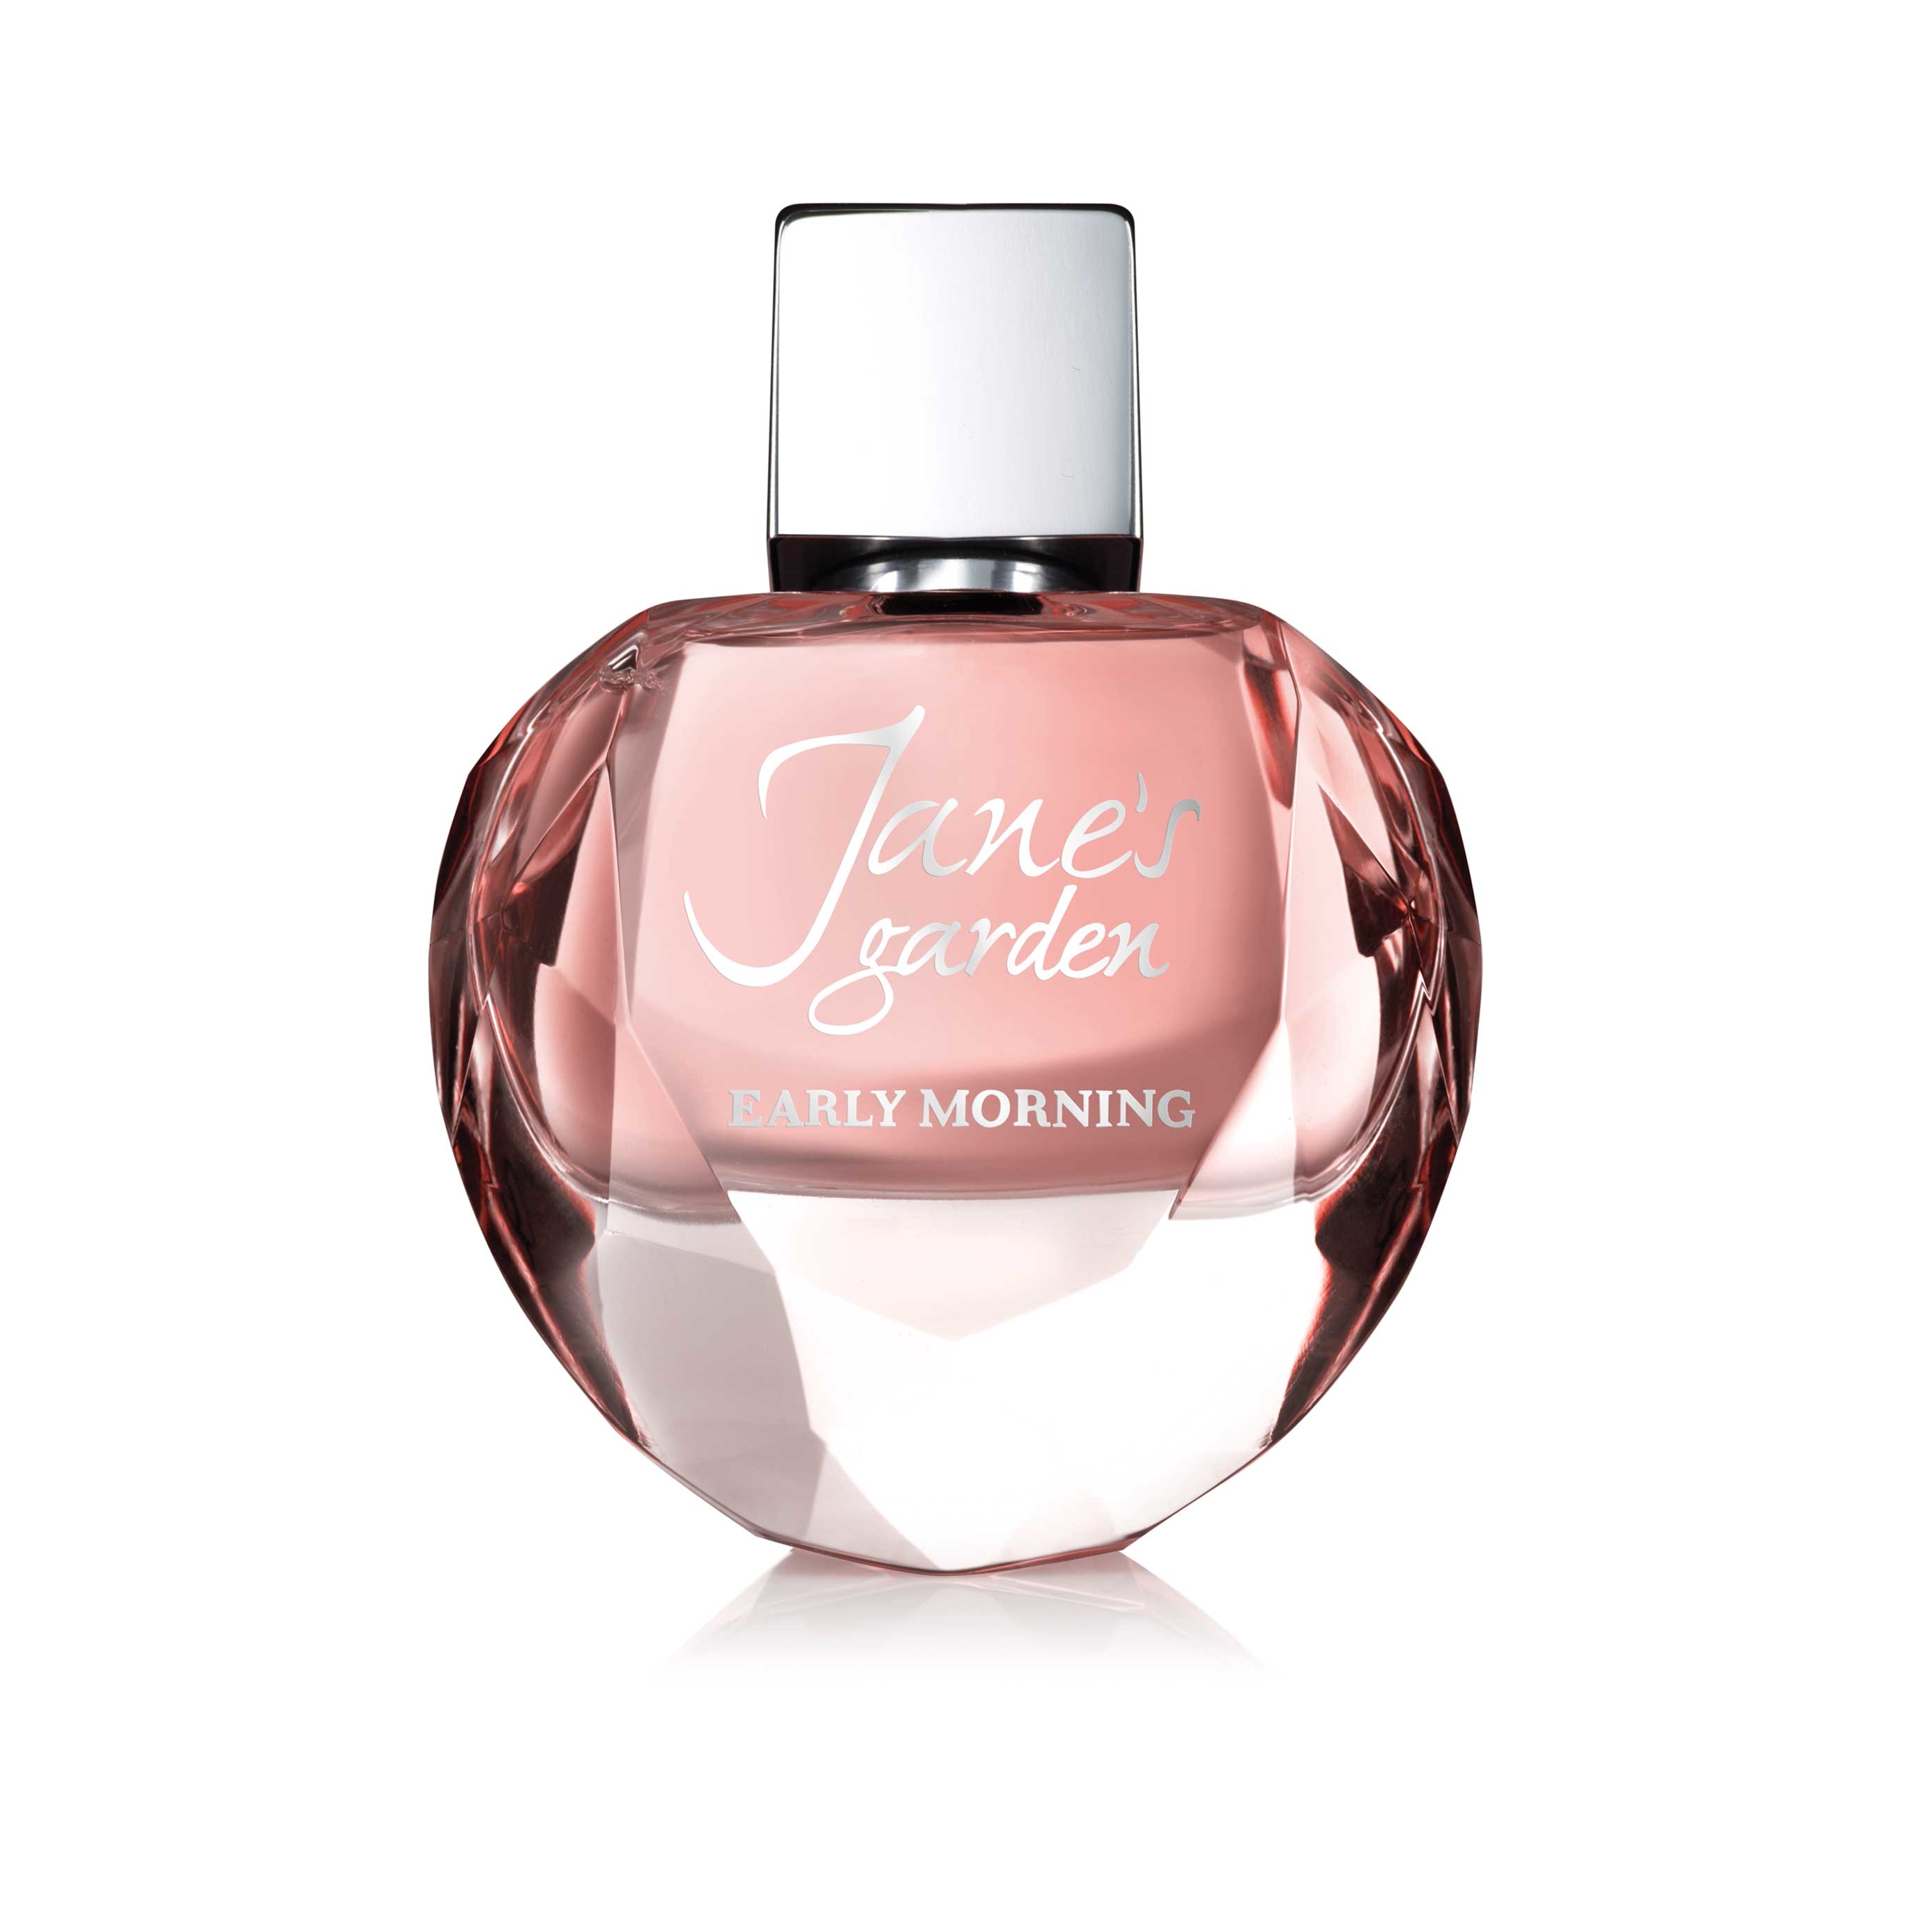 Perfume Photos — Superepus News